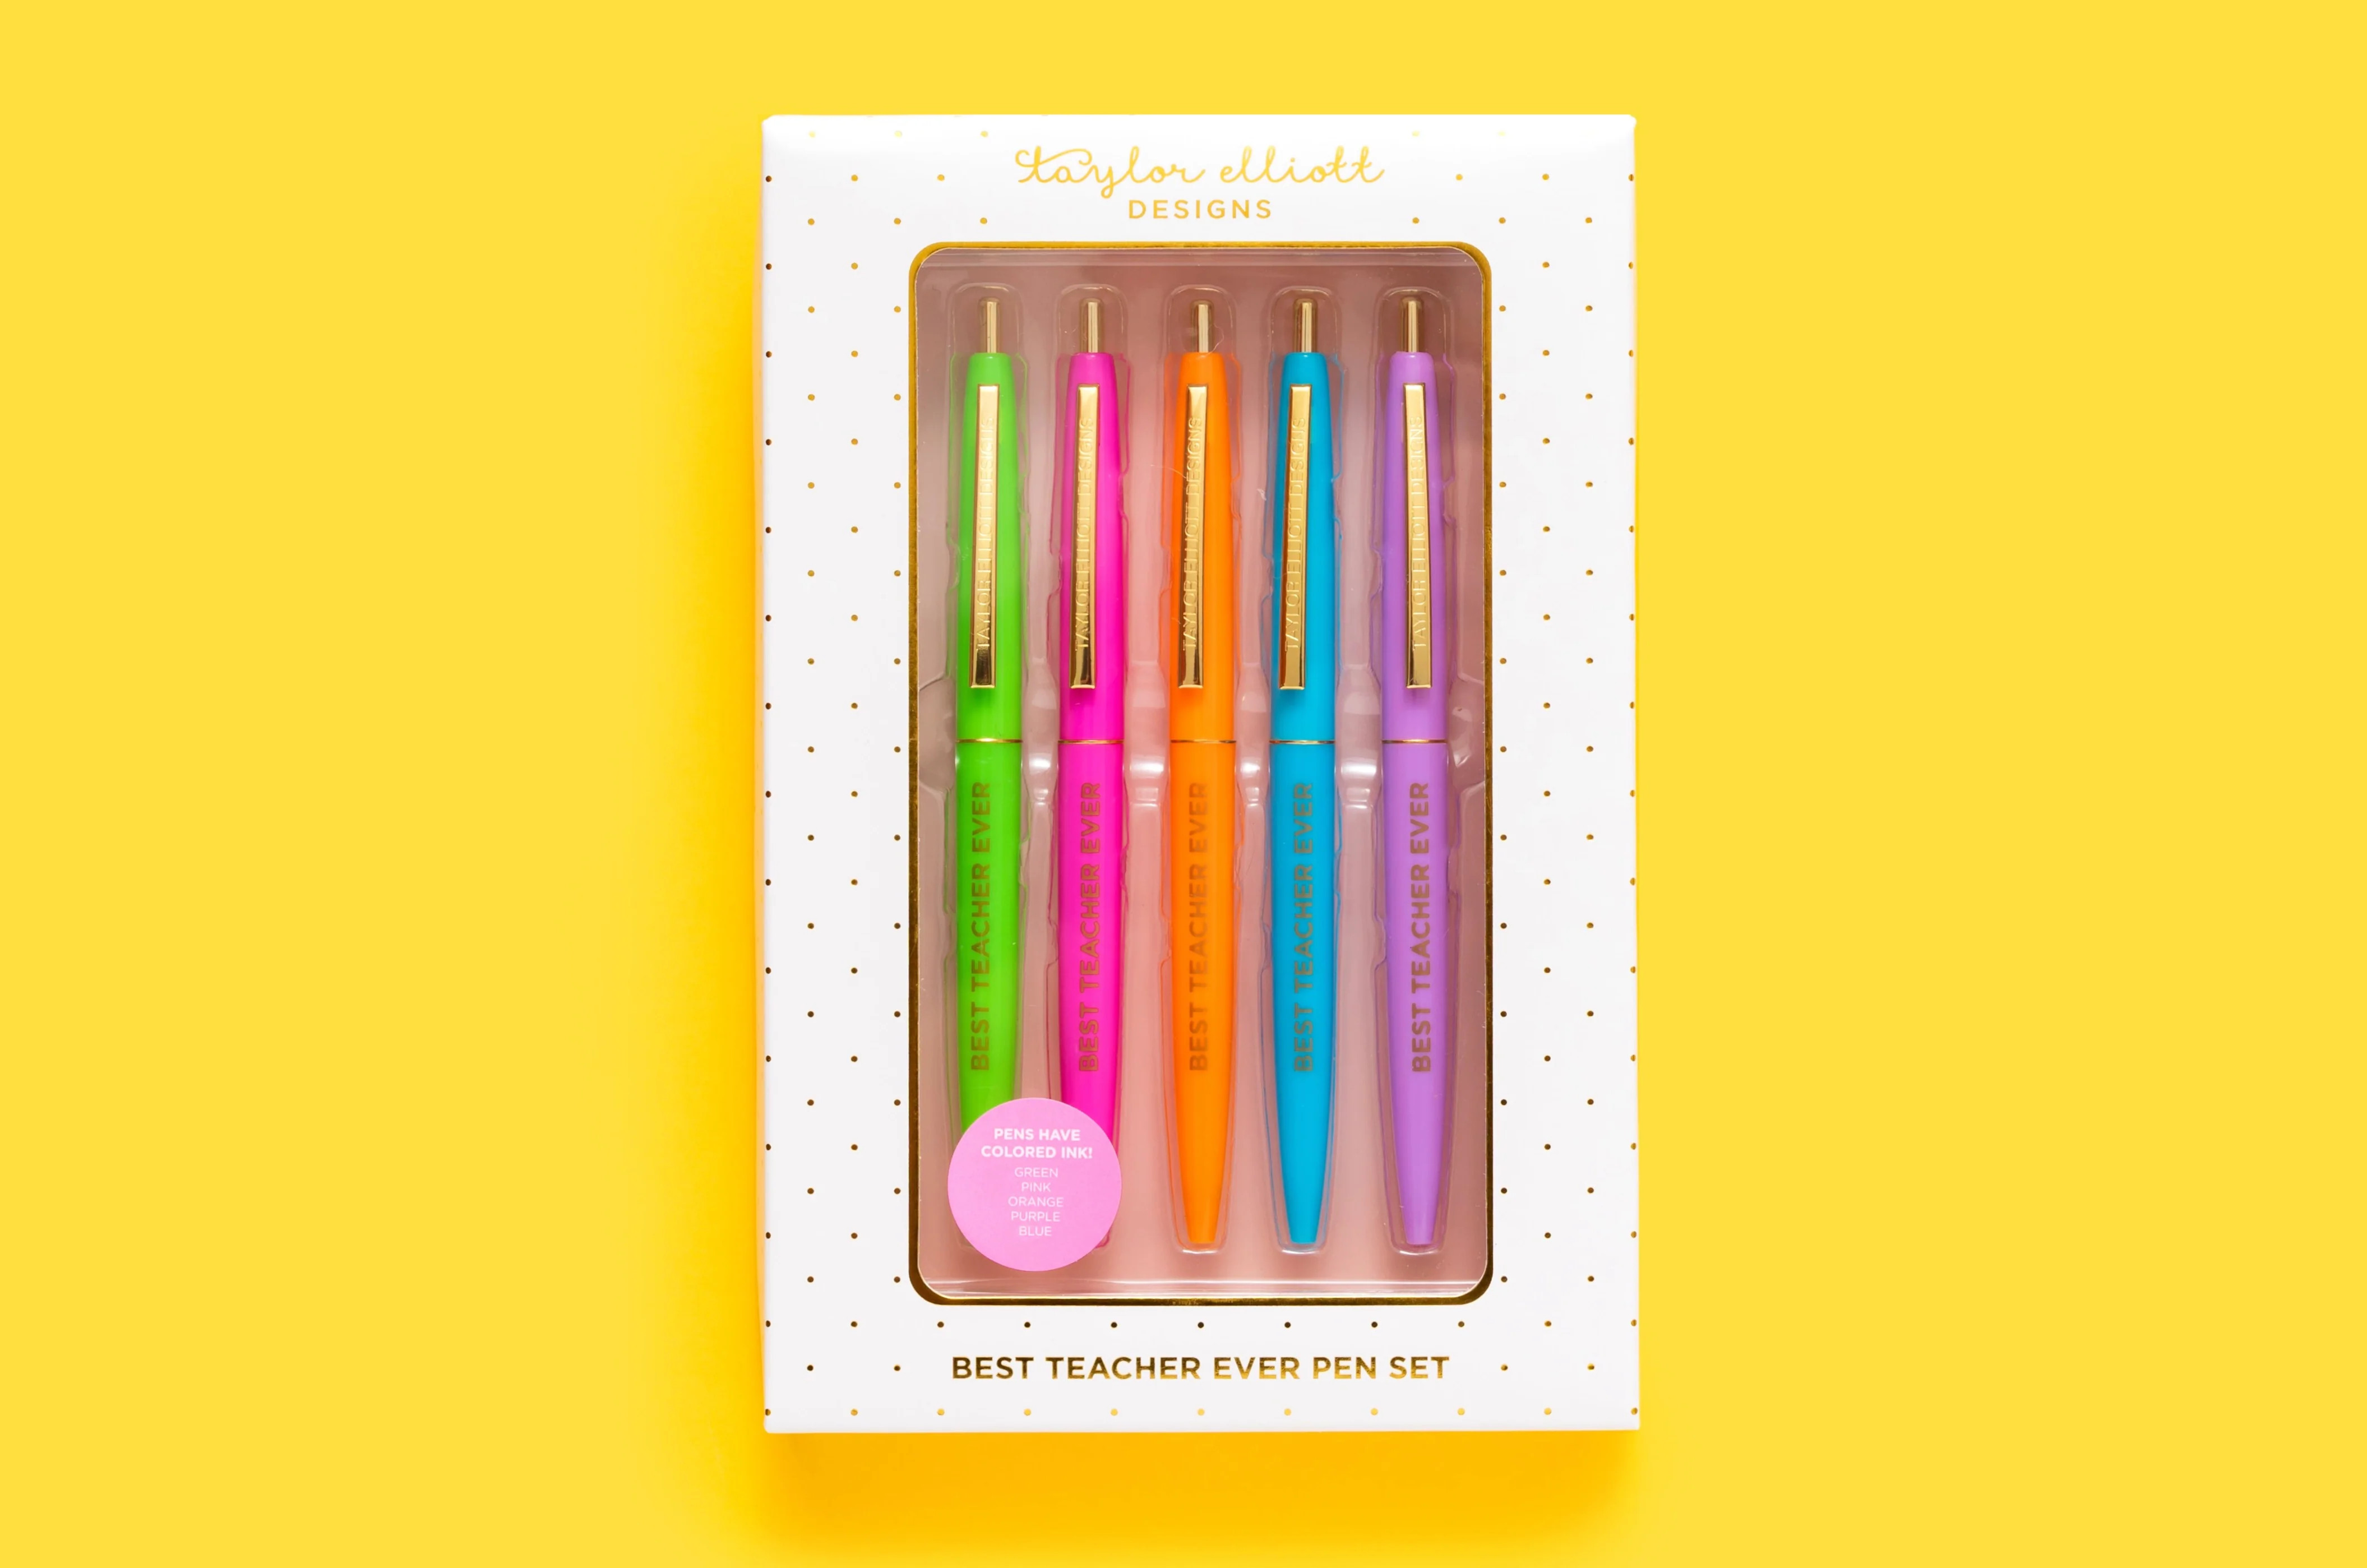 Best Teacher Ever Pen Set | Taylor Elliott Designs